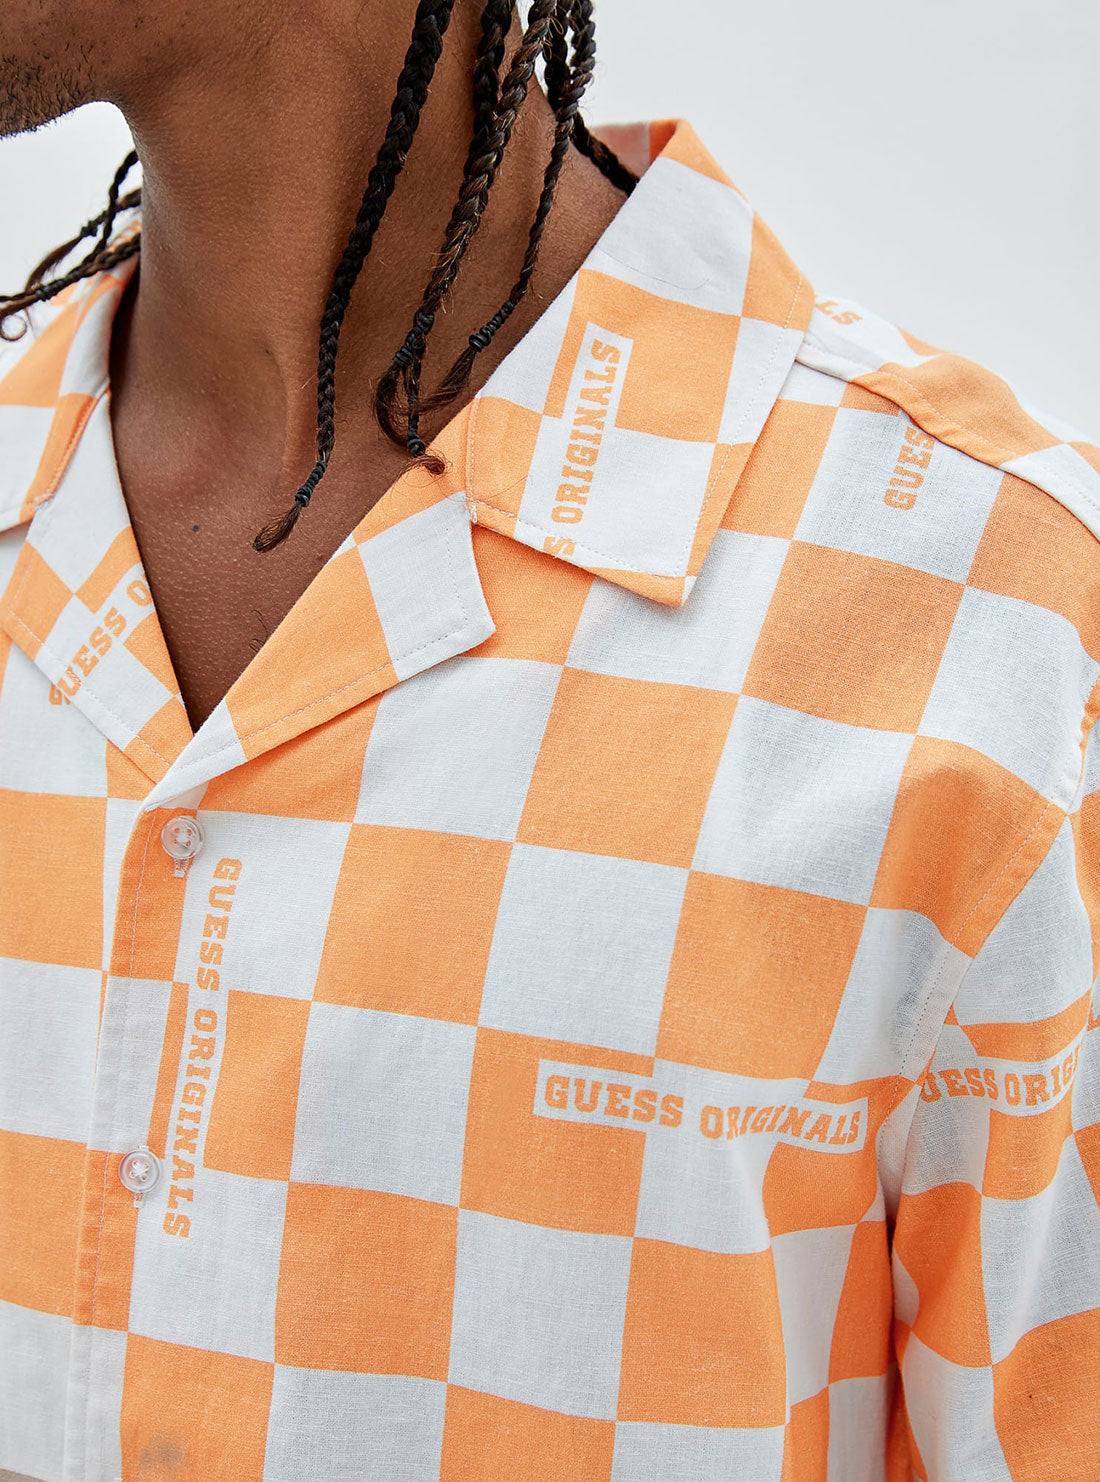 GUESS Men's Guess Originals Orange Checker Shirt M2YH00WEOZ0 Detail View